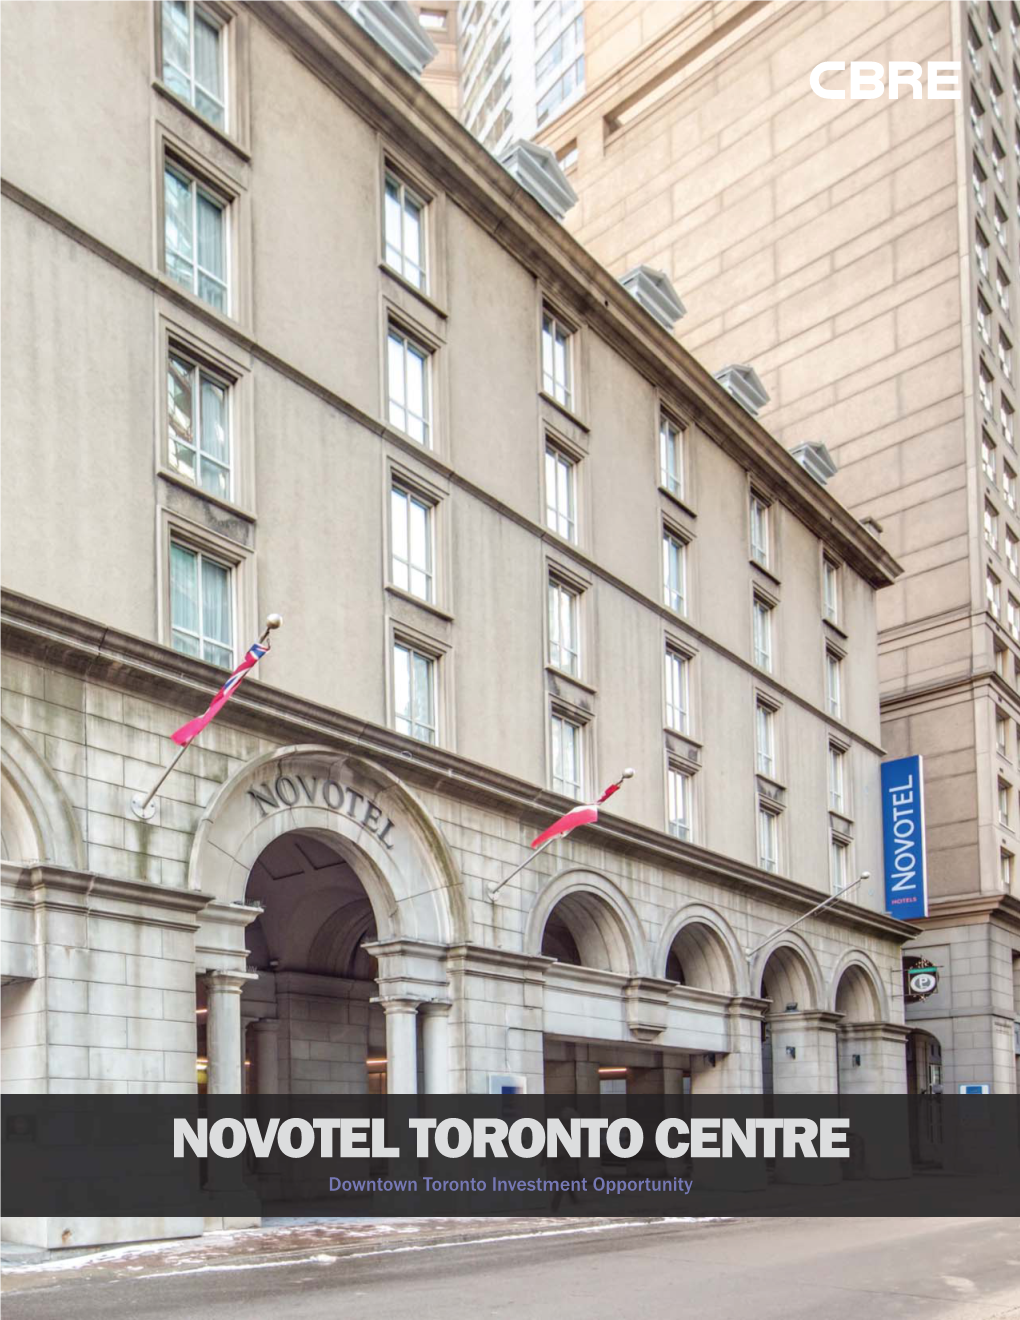 Novotel Toronto Centre Flyer.Indd